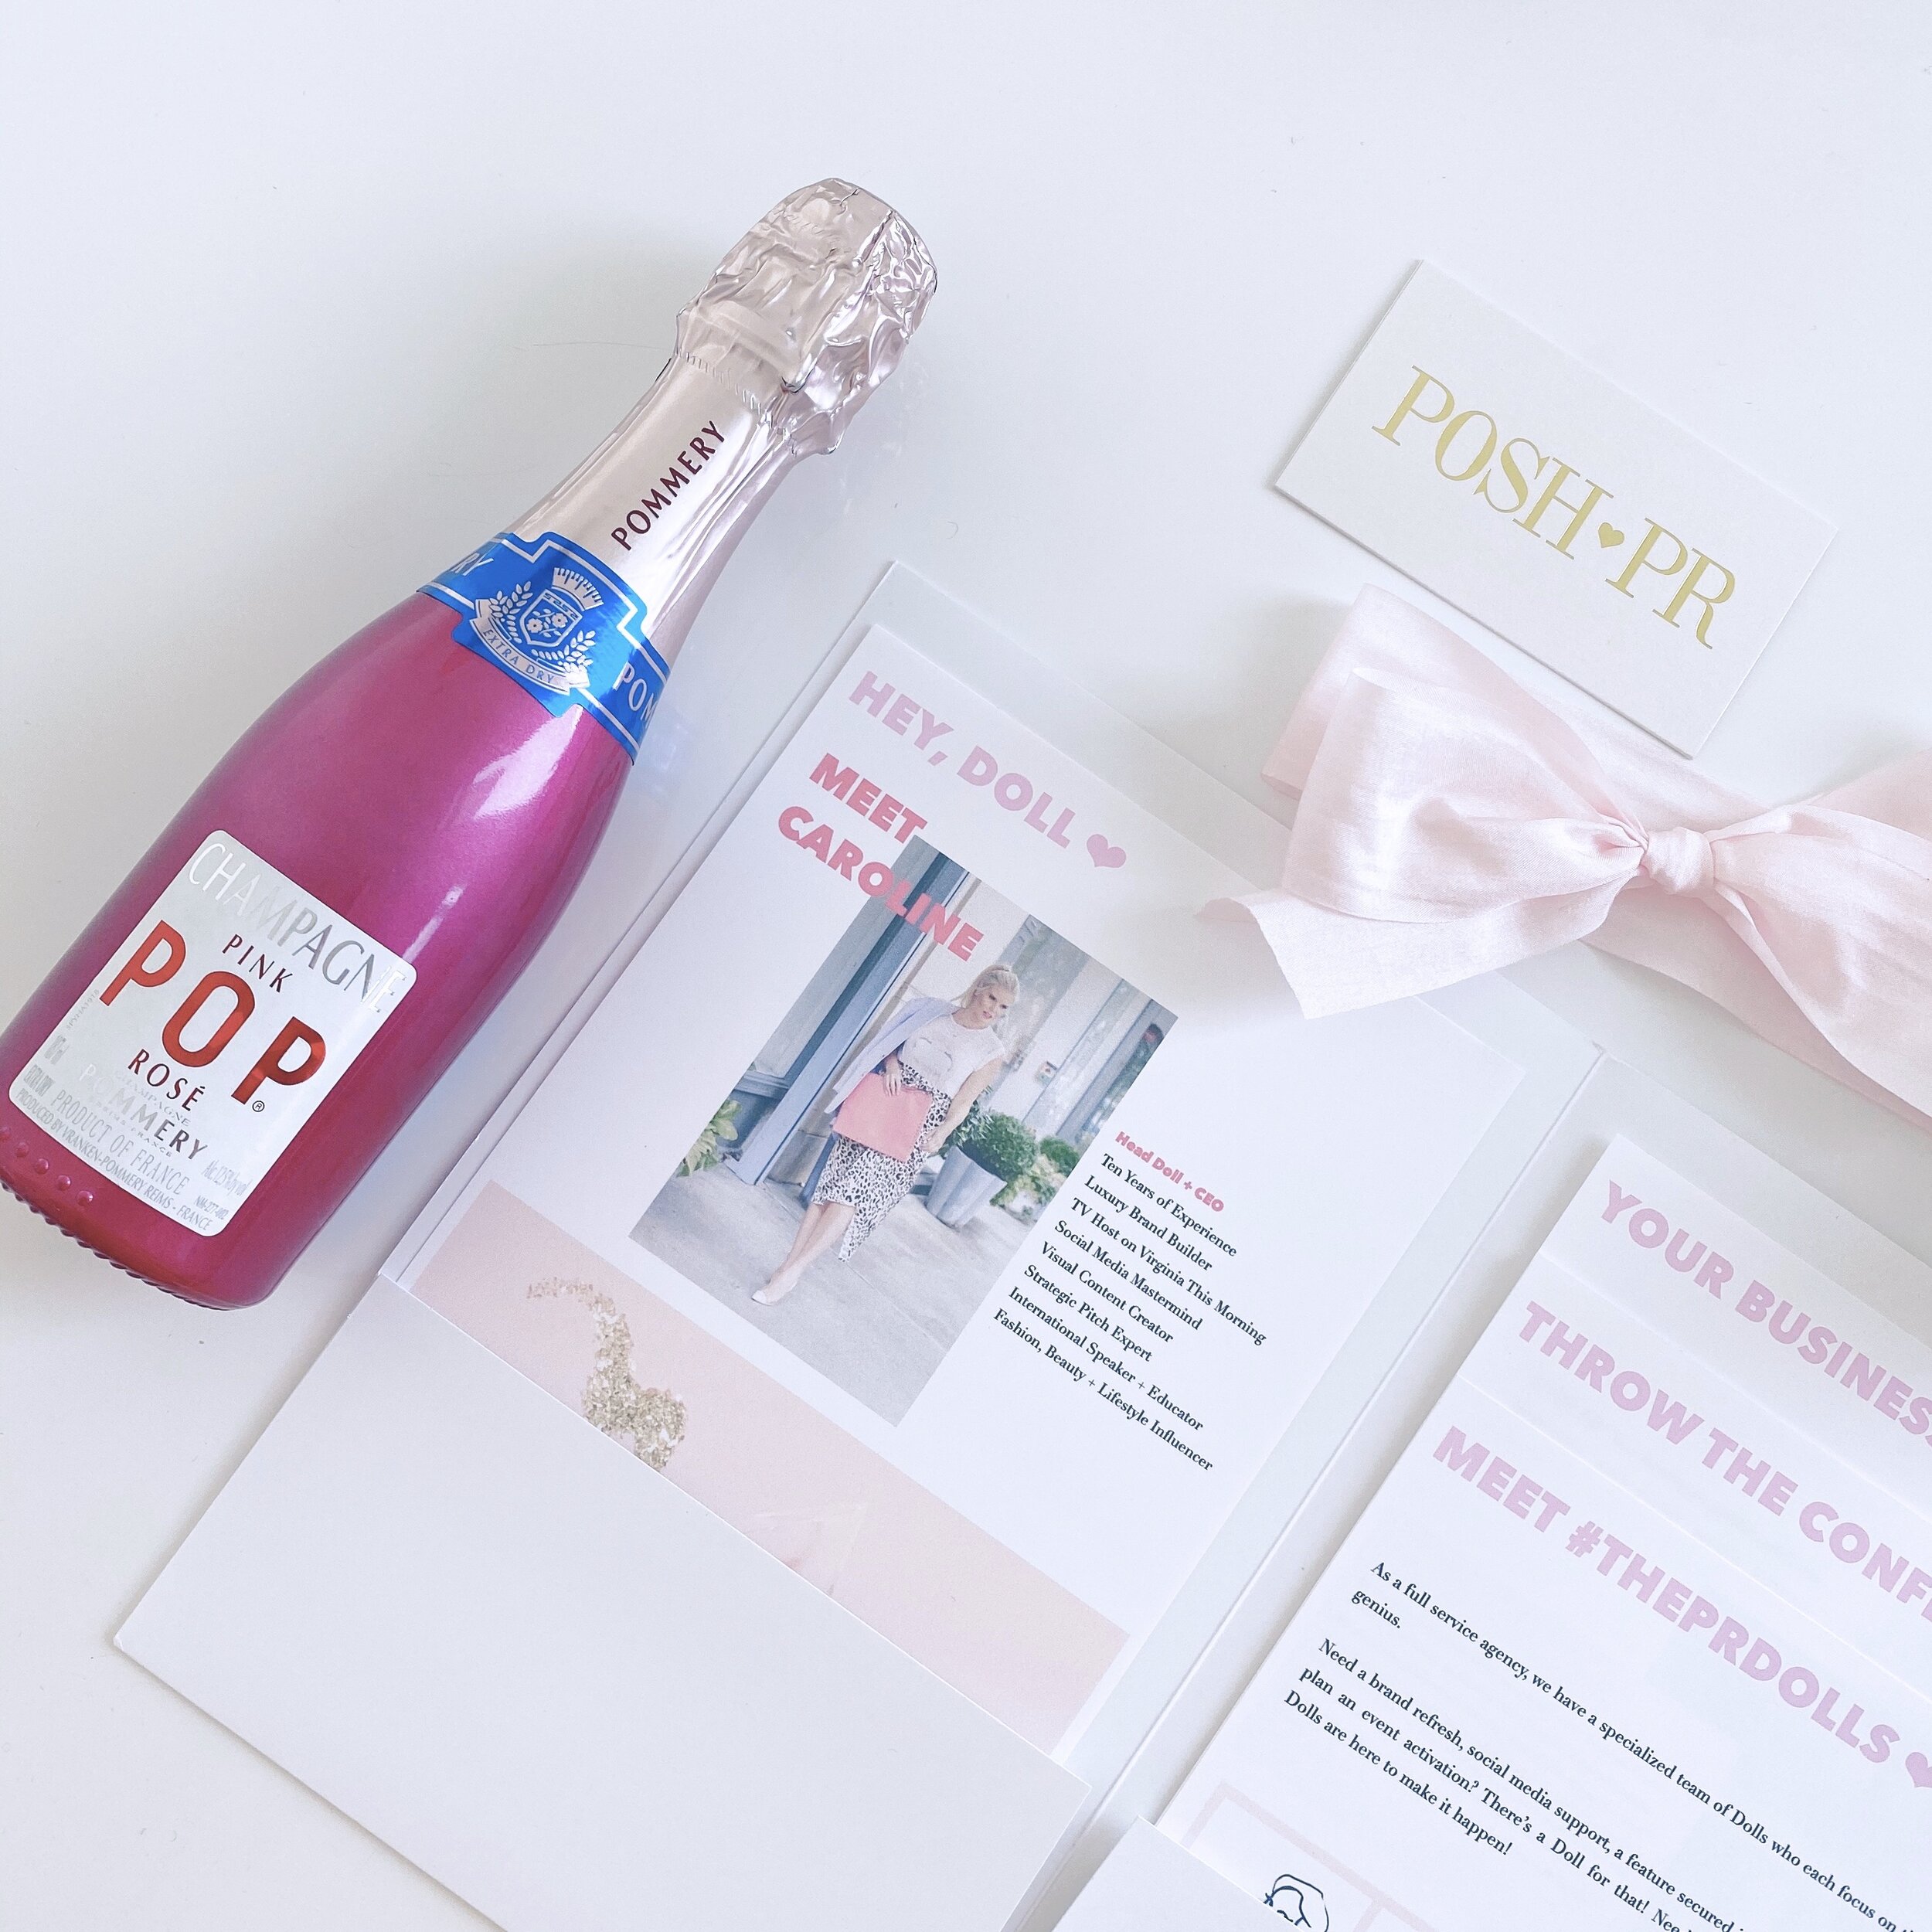 POSH-PR-Blog-Press-Kit-Pretty-Pink-Packages-Elevated-Details-Champagne-Sugarfina-Bows-Social-Media-Agency-Luxury-Branding-Branded-Packing-6.JPG